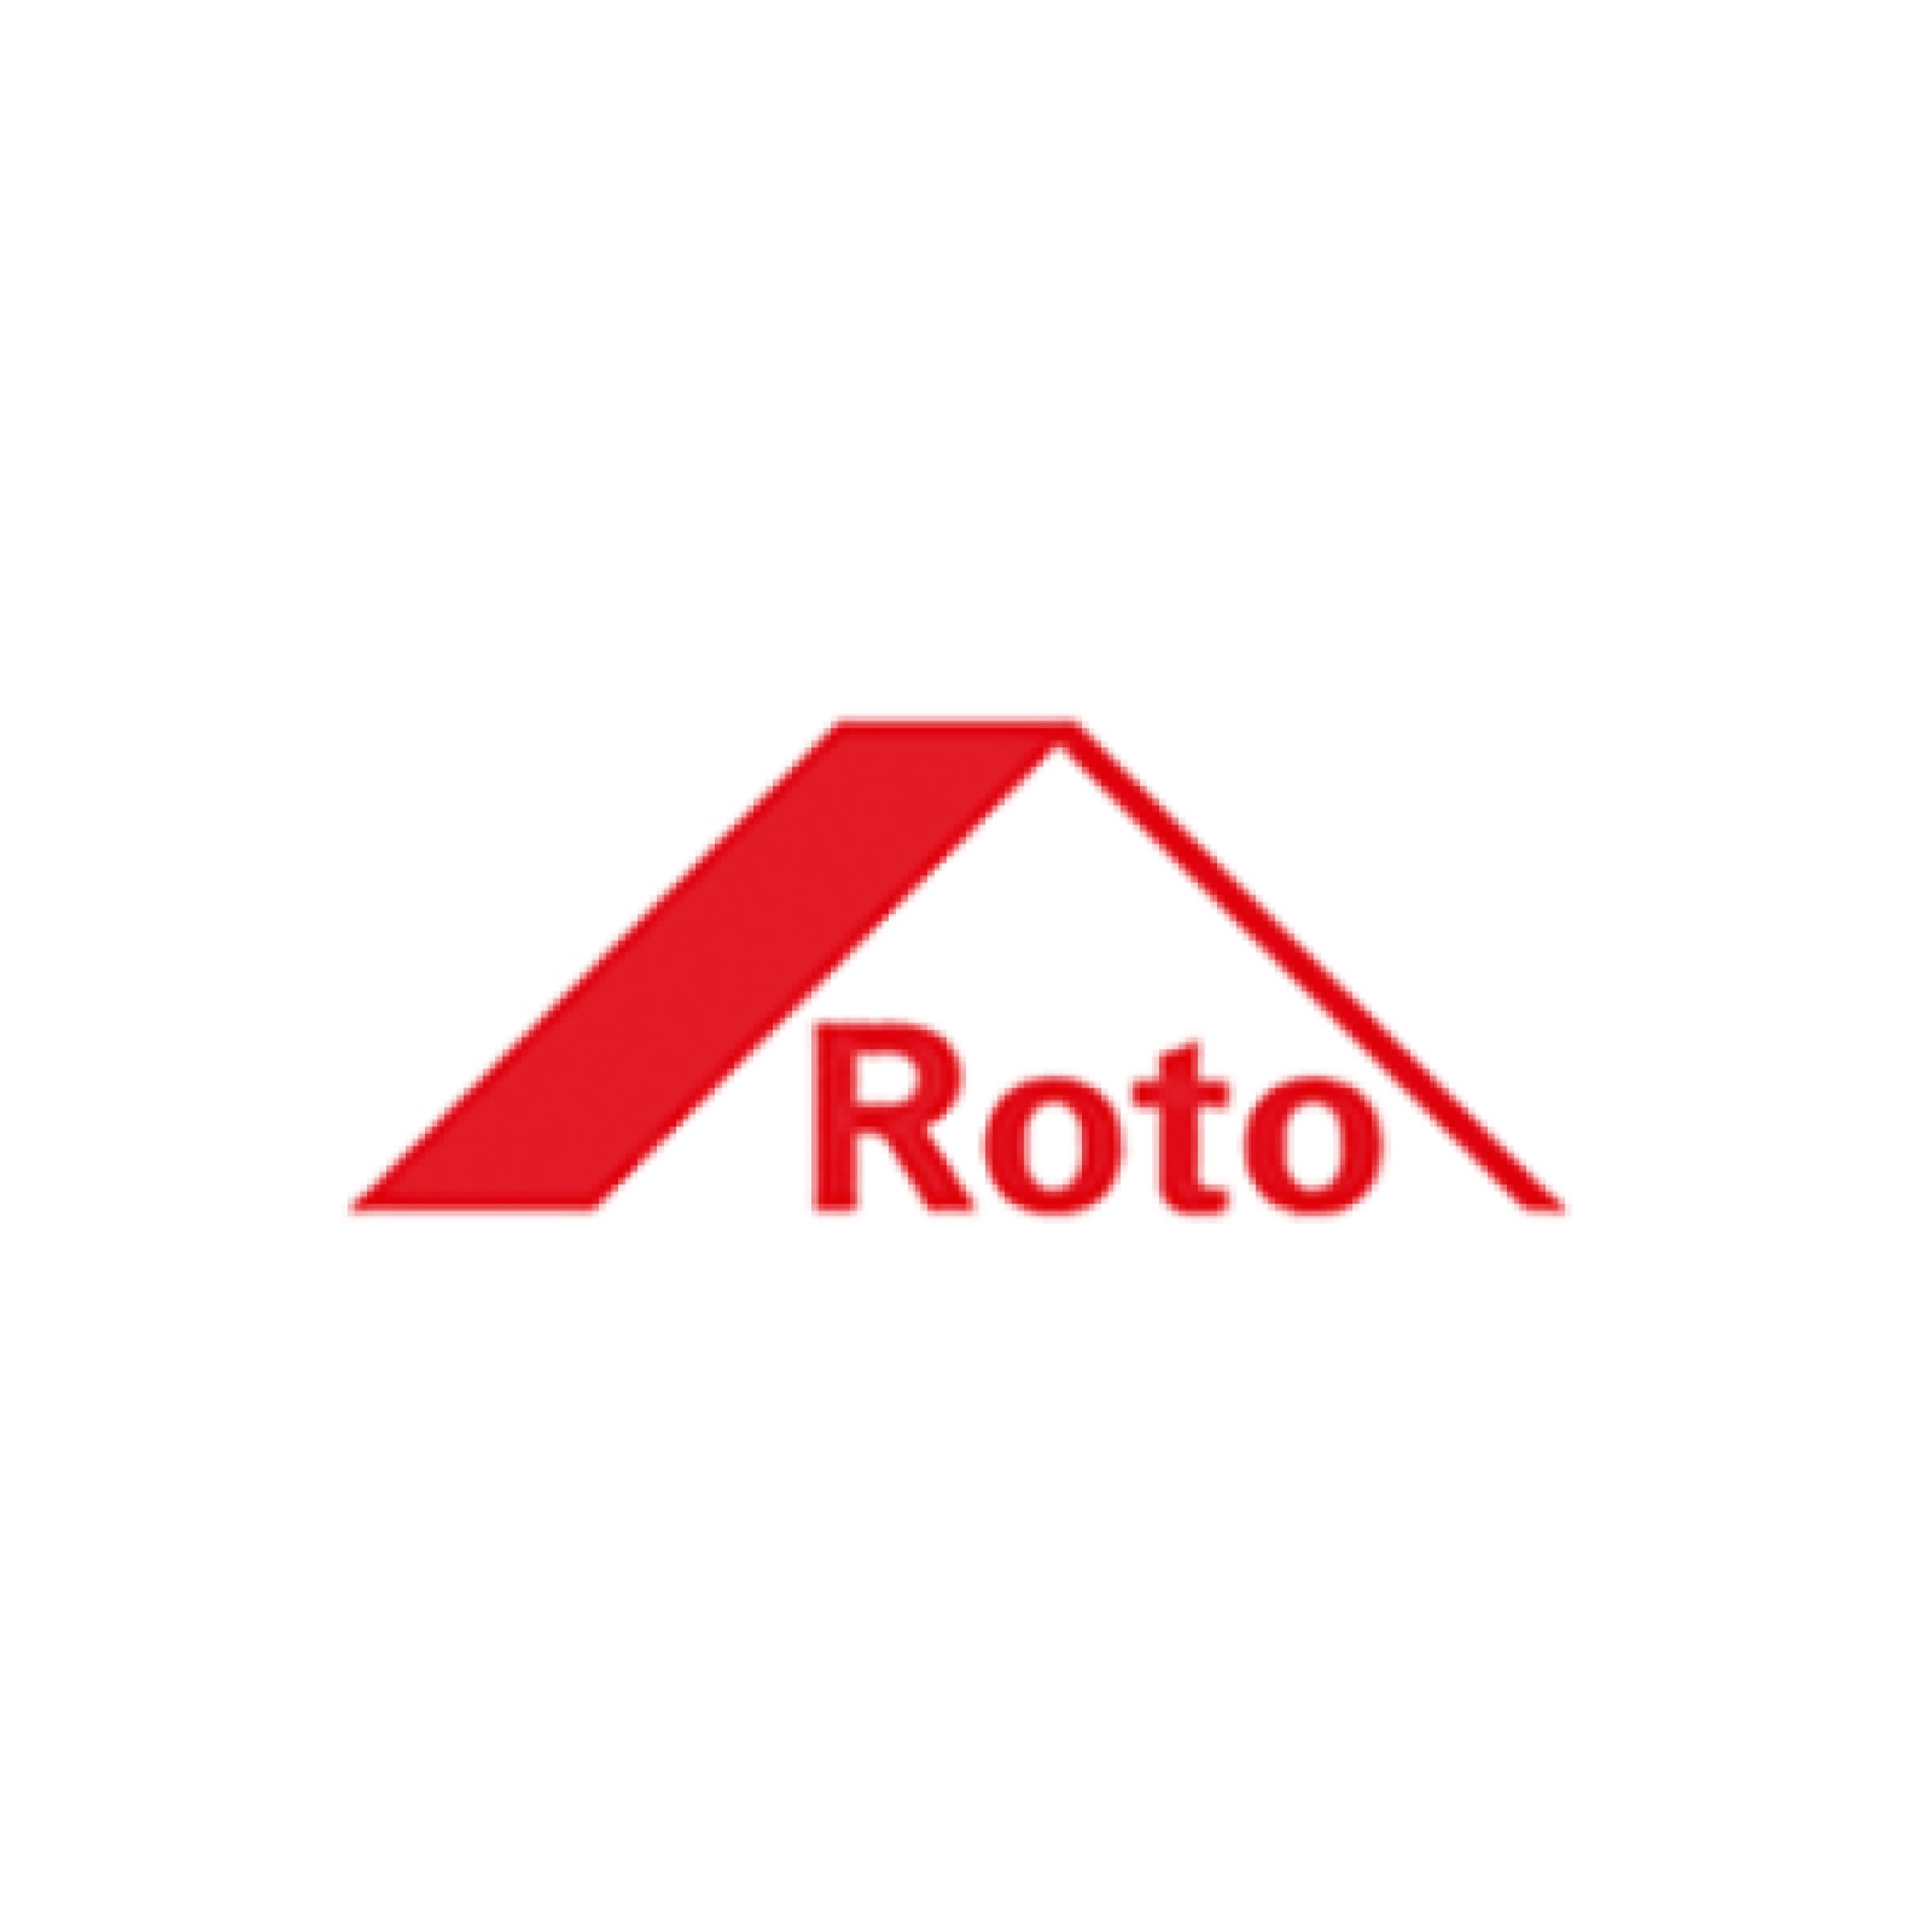 Roto Frank Austria GmbH